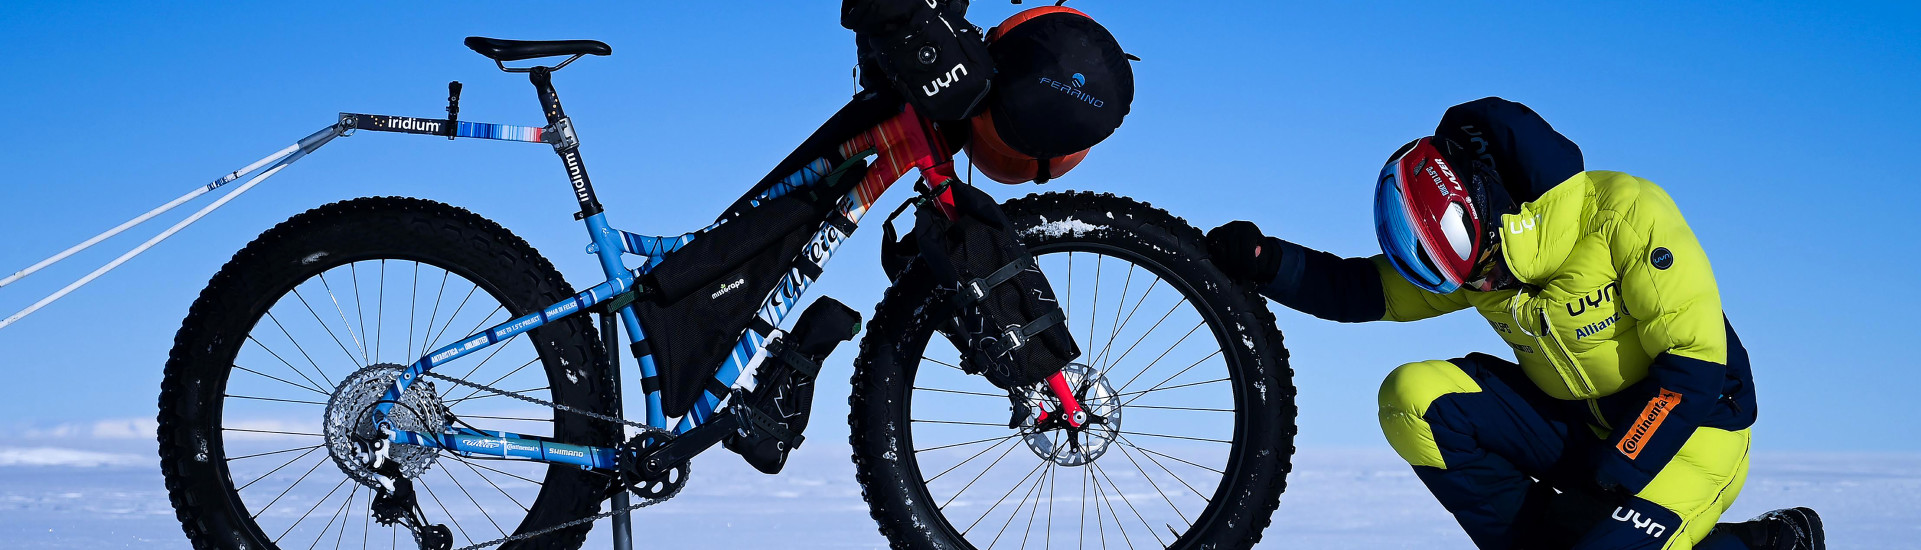 Ultrabiker Omar Di Felice tells us about his adventure in Antarctica on two wheels